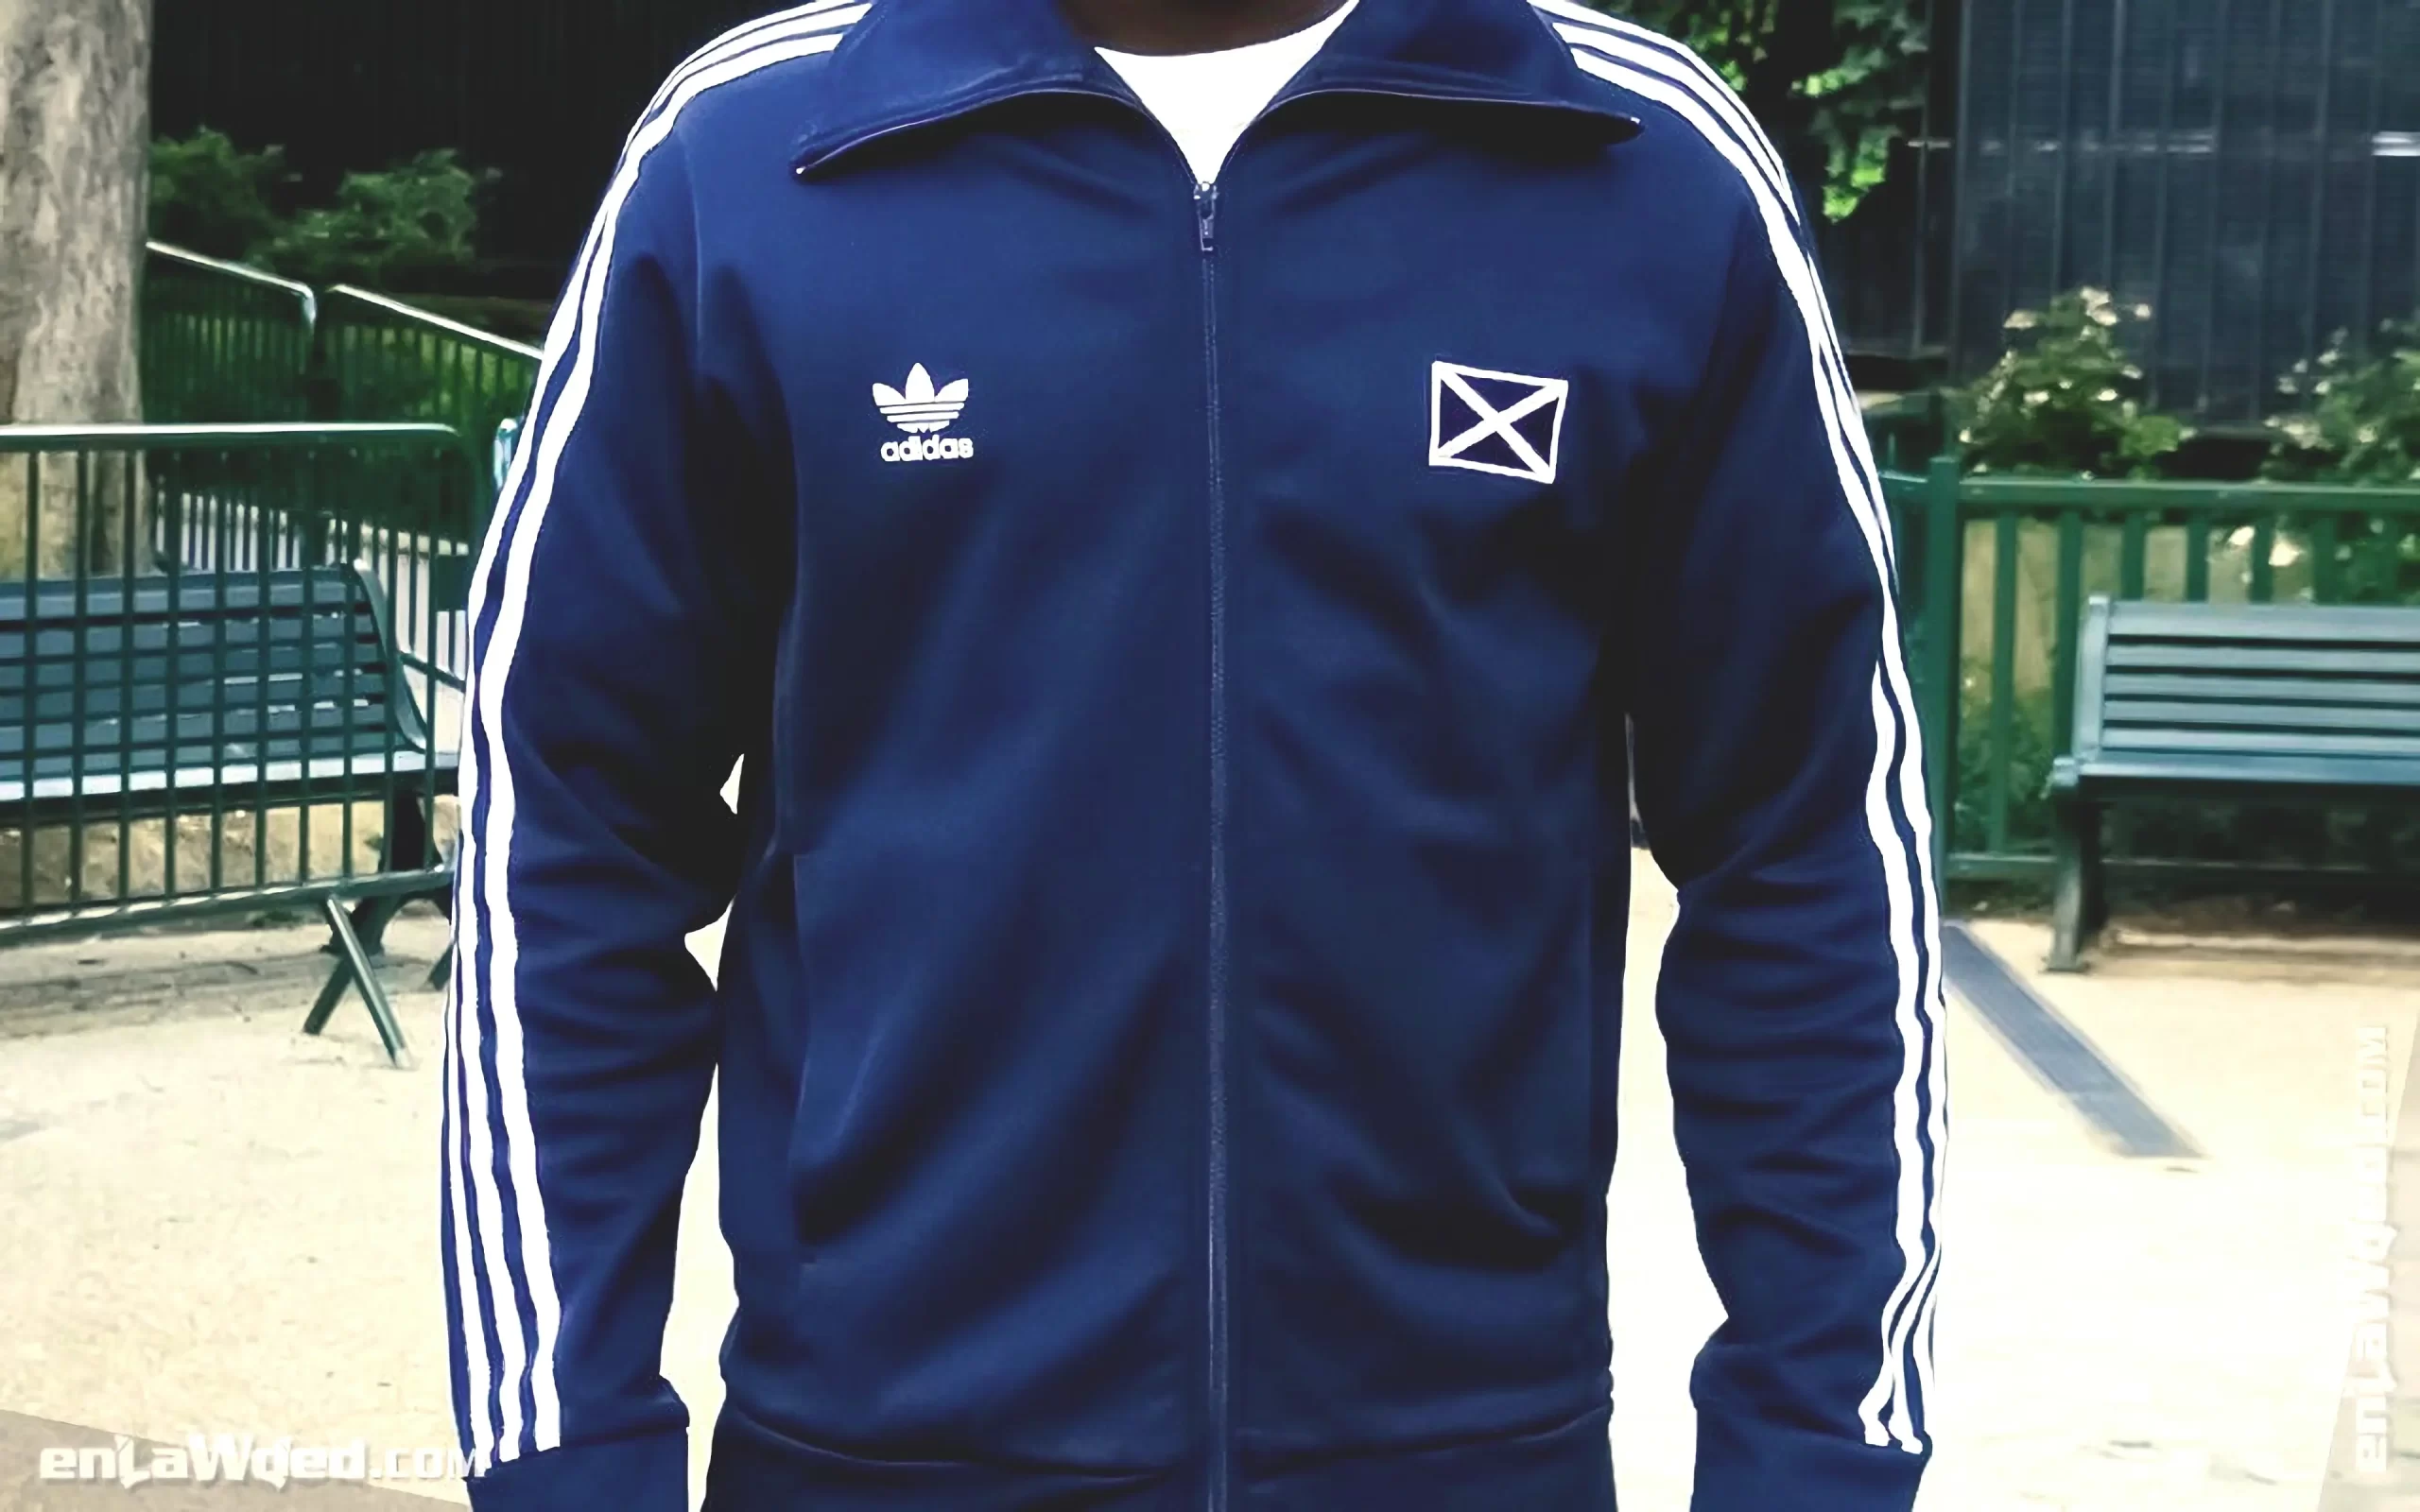 Men’s 2004 Scotland Track Top by Adidas Originals: Quiet (EnLawded.com file #lmcghqacnbdf1jsupbh)